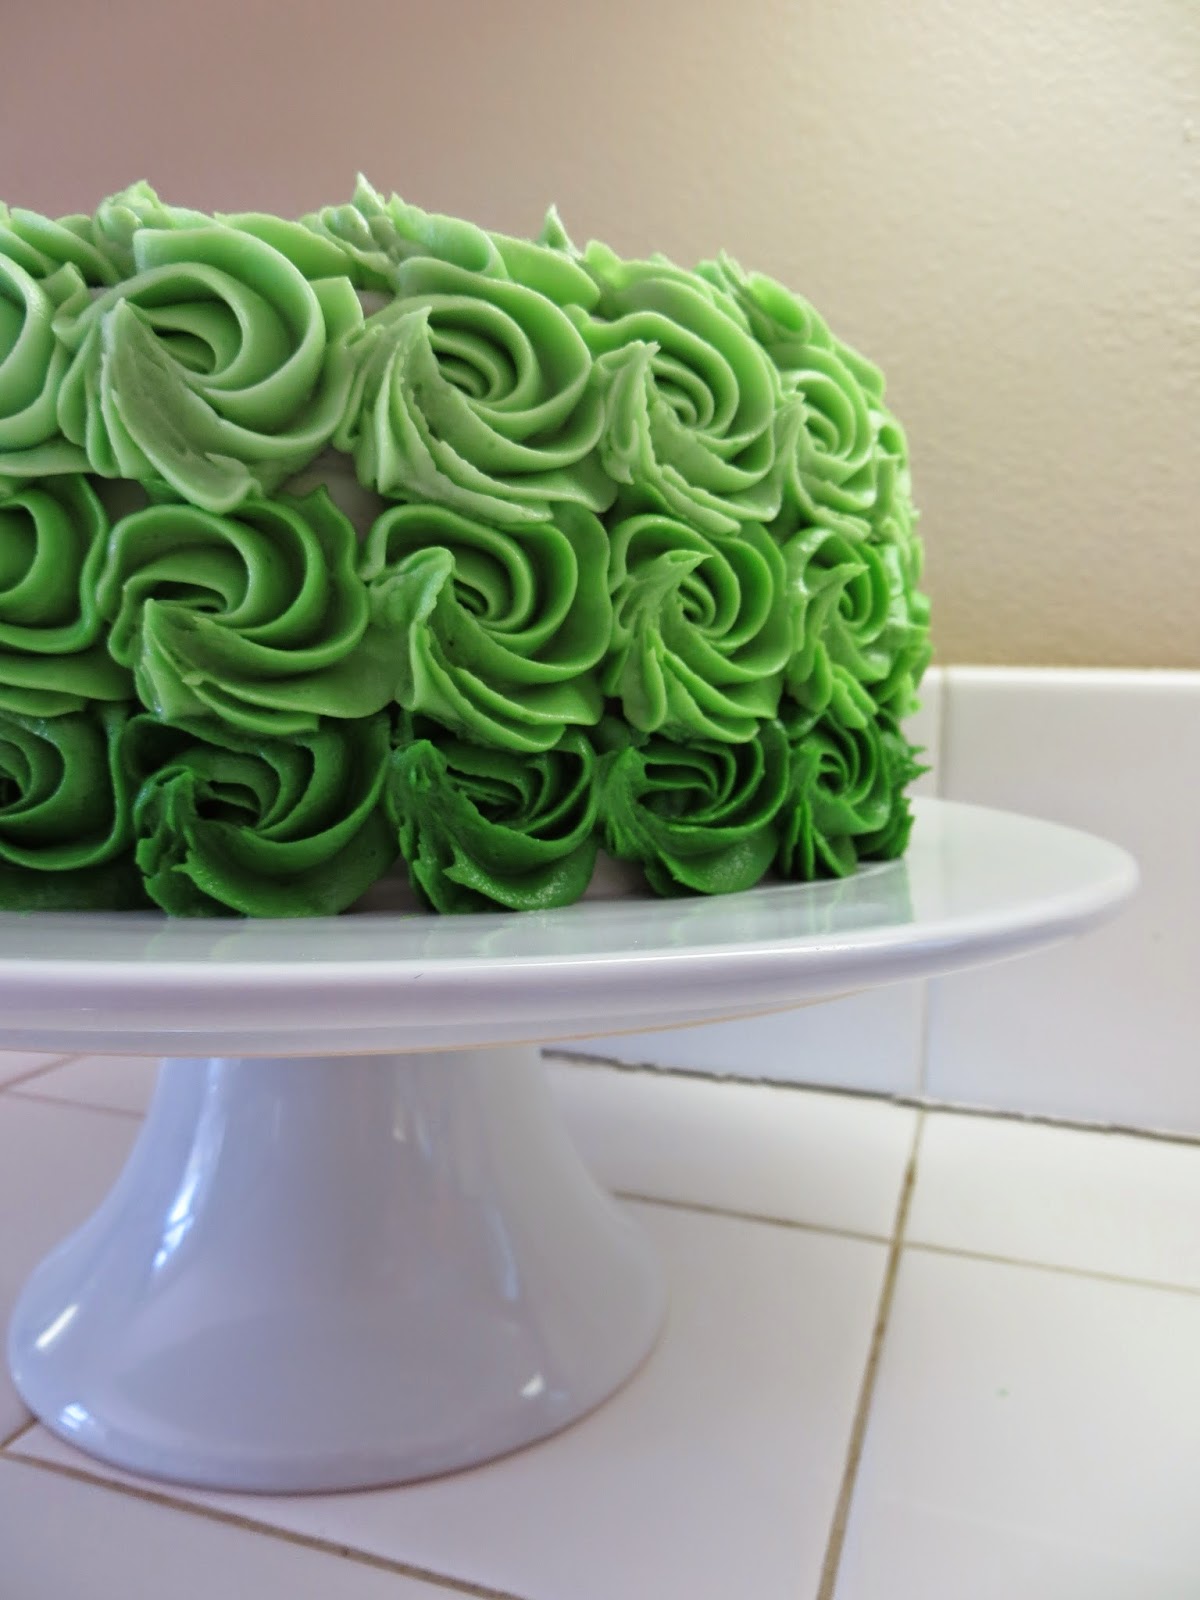 Cakes by Angel: Rosette Swirled Spring Green Cake